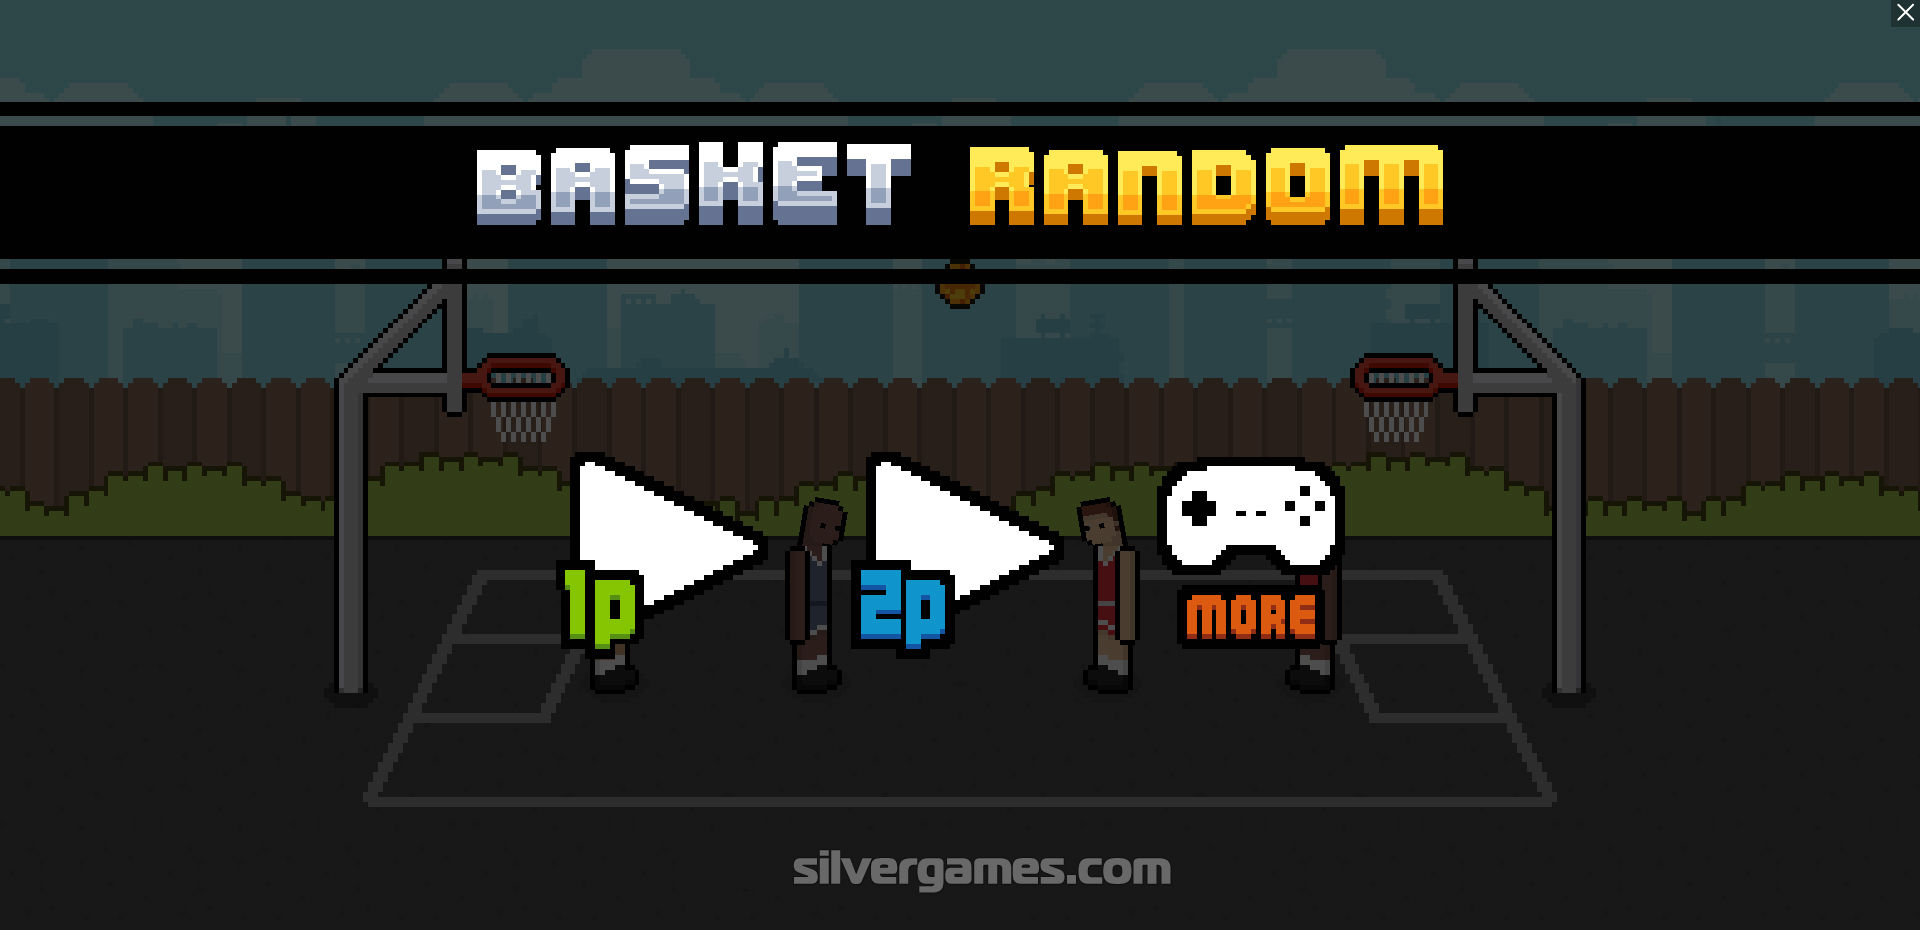 BASKET RANDOM free online game on